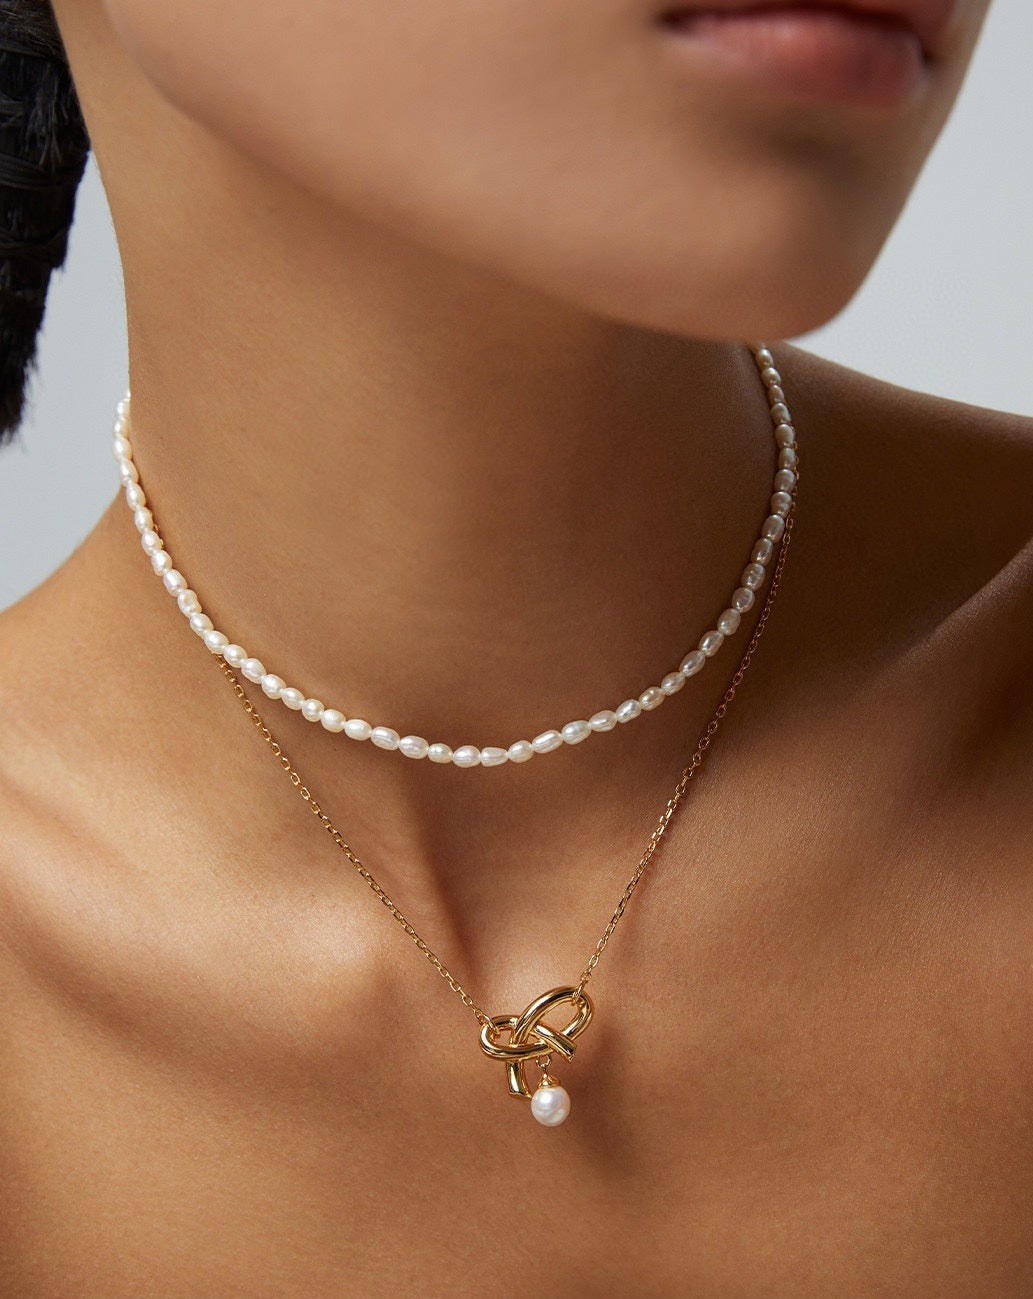 fashion-jewelry-minimalist-jewelry-design-jewelry-set-necklace-pearl-earring-gold-coated-silver-bijoux-minimalist-retro-gold-design-necklace-butterfly-heart-shape-pearl-necklace-earrings